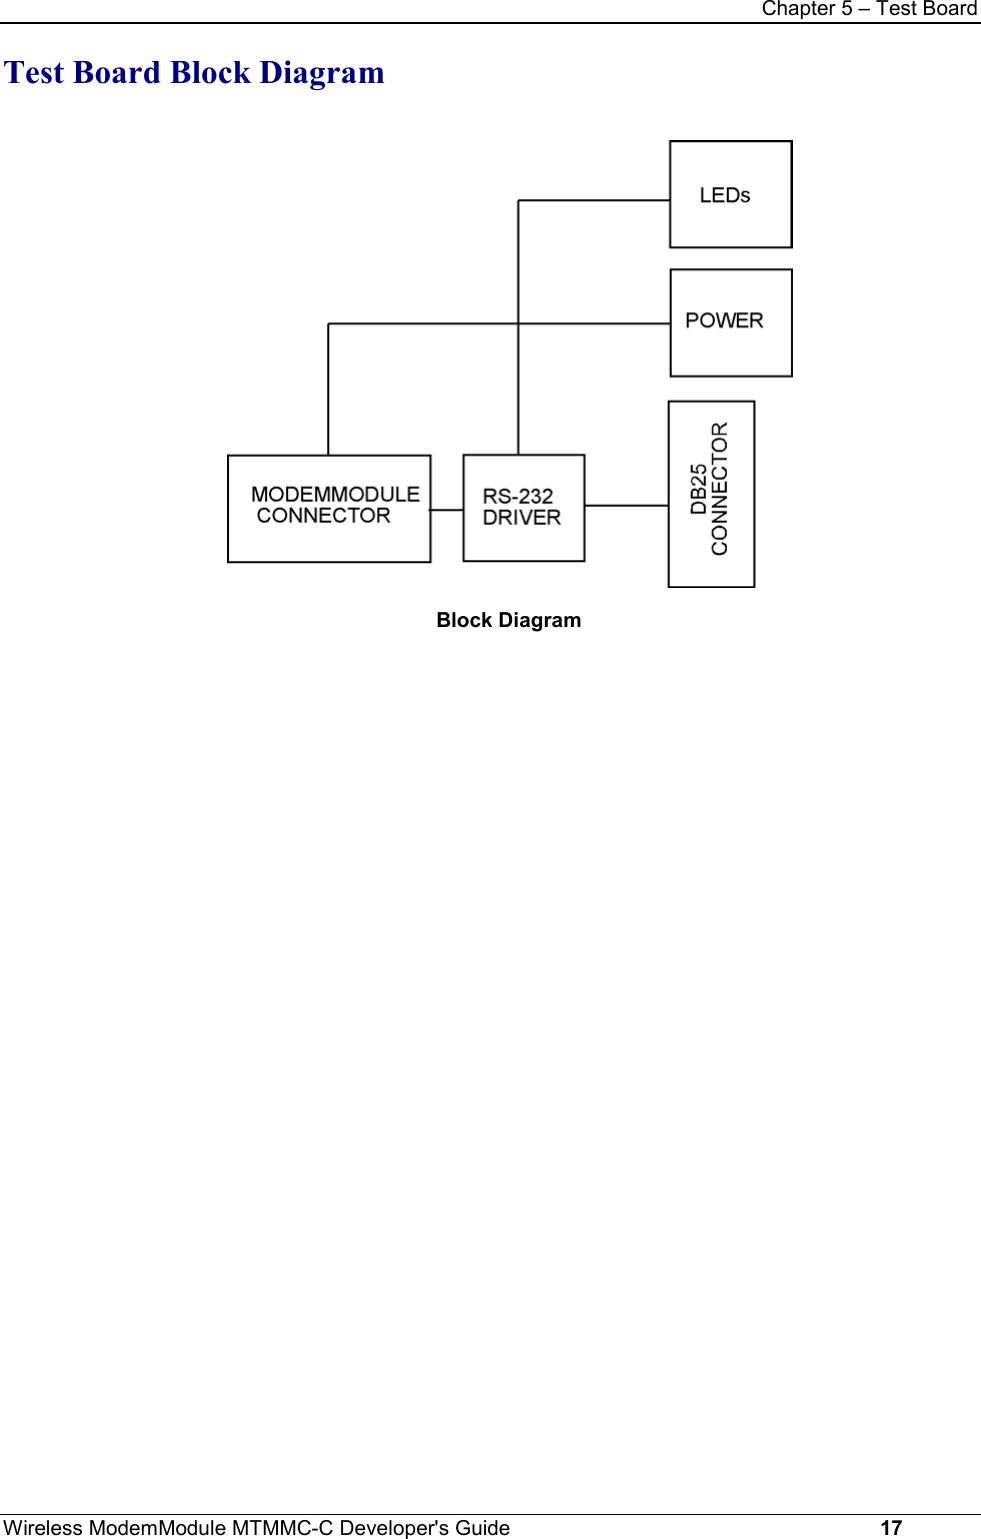 Chapter 5 – Test BoardWireless ModemModule MTMMC-C Developer&apos;s Guide     17Test Board Block DiagramBlock Diagram